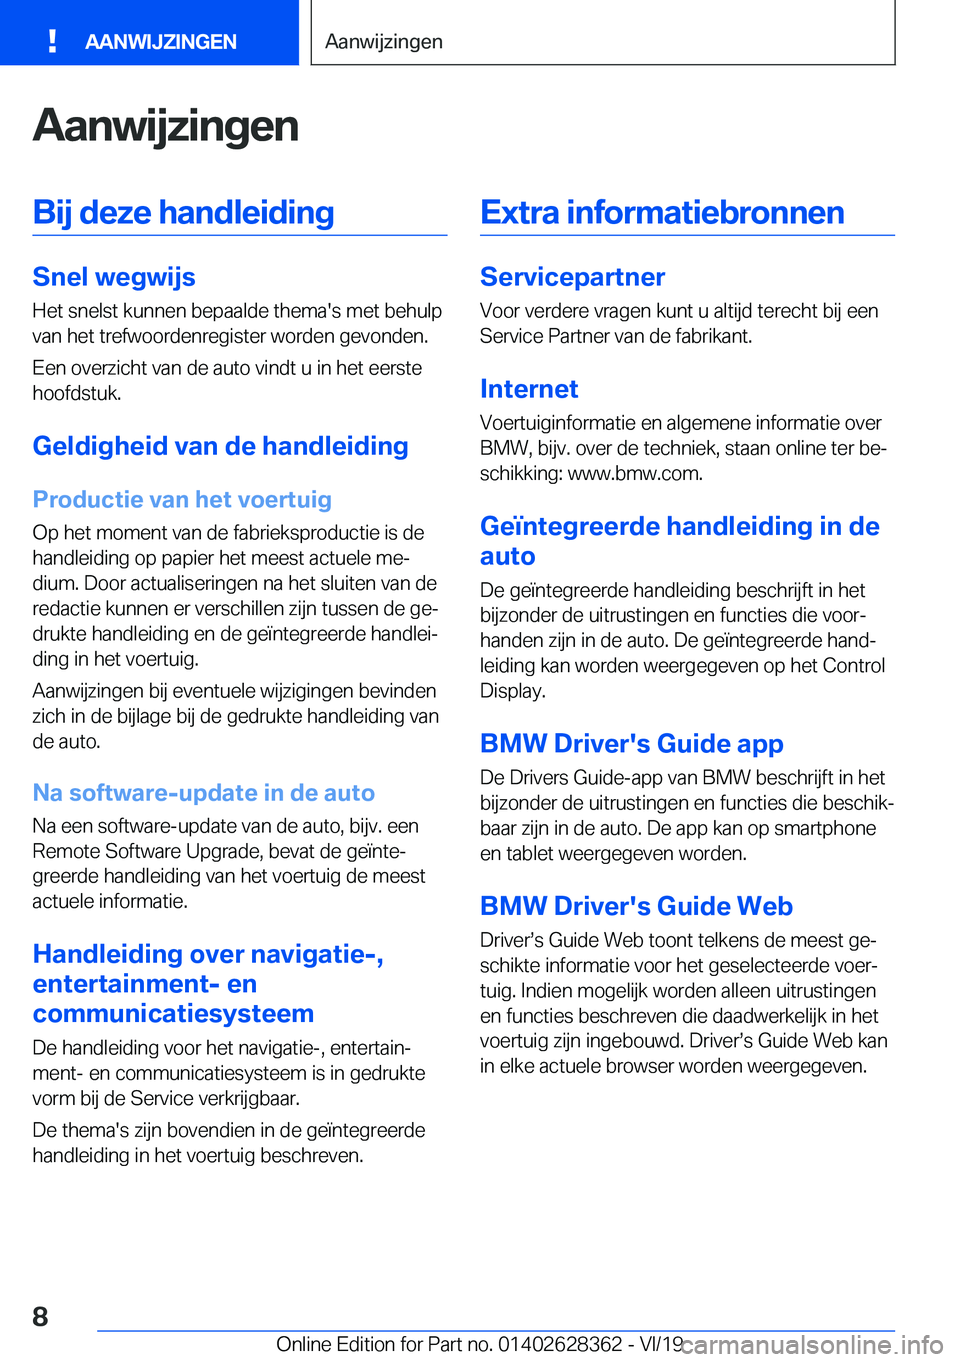 BMW 8 SERIES COUPE 2020  Instructieboekjes (in Dutch) �A�a�n�w�i�j�z�i�n�g�e�n�B�i�j��d�e�z�e��h�a�n�d�l�e�i�d�i�n�g
�S�n�e�l��w�e�g�w�i�j�s
�H�e�t��s�n�e�l�s�t��k�u�n�n�e�n��b�e�p�a�a�l�d�e��t�h�e�m�a�'�s��m�e�t��b�e�h�u�l�p
�v�a�n��h�e�t�